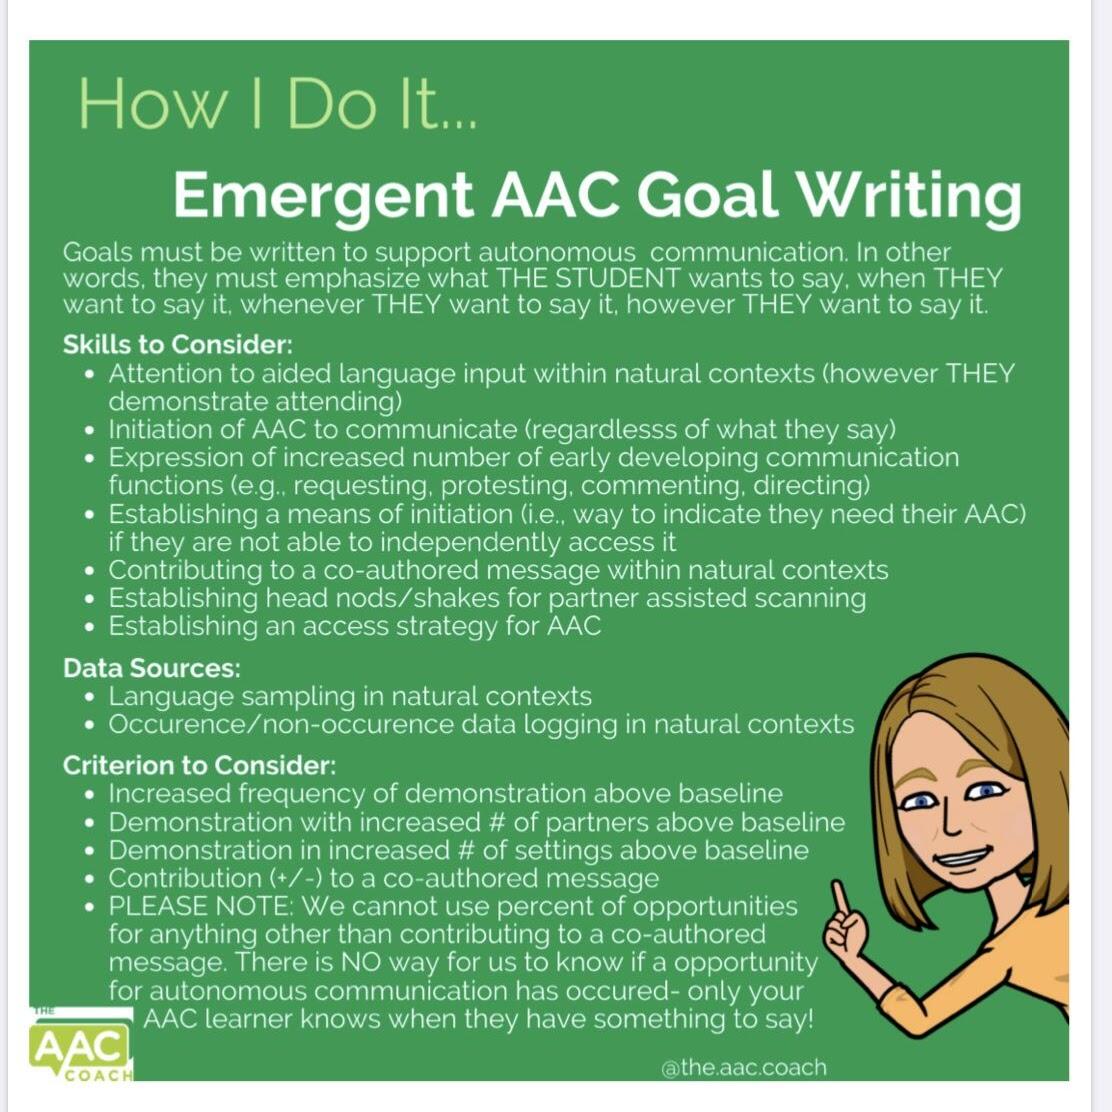 Emergent AAC Goal Writing